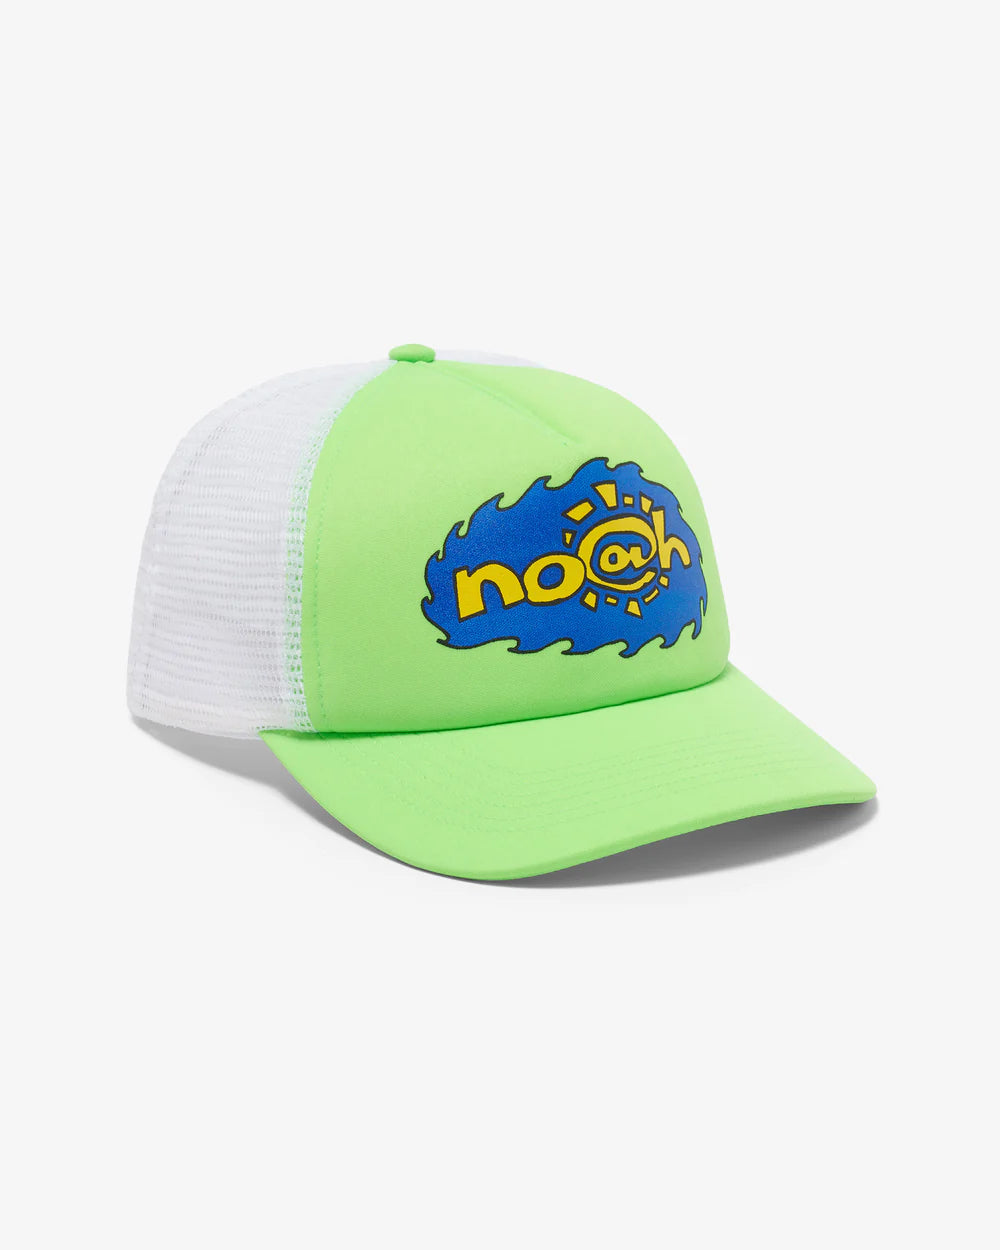 Noah x ADWYSD Trucker Hat: Assorted Colors